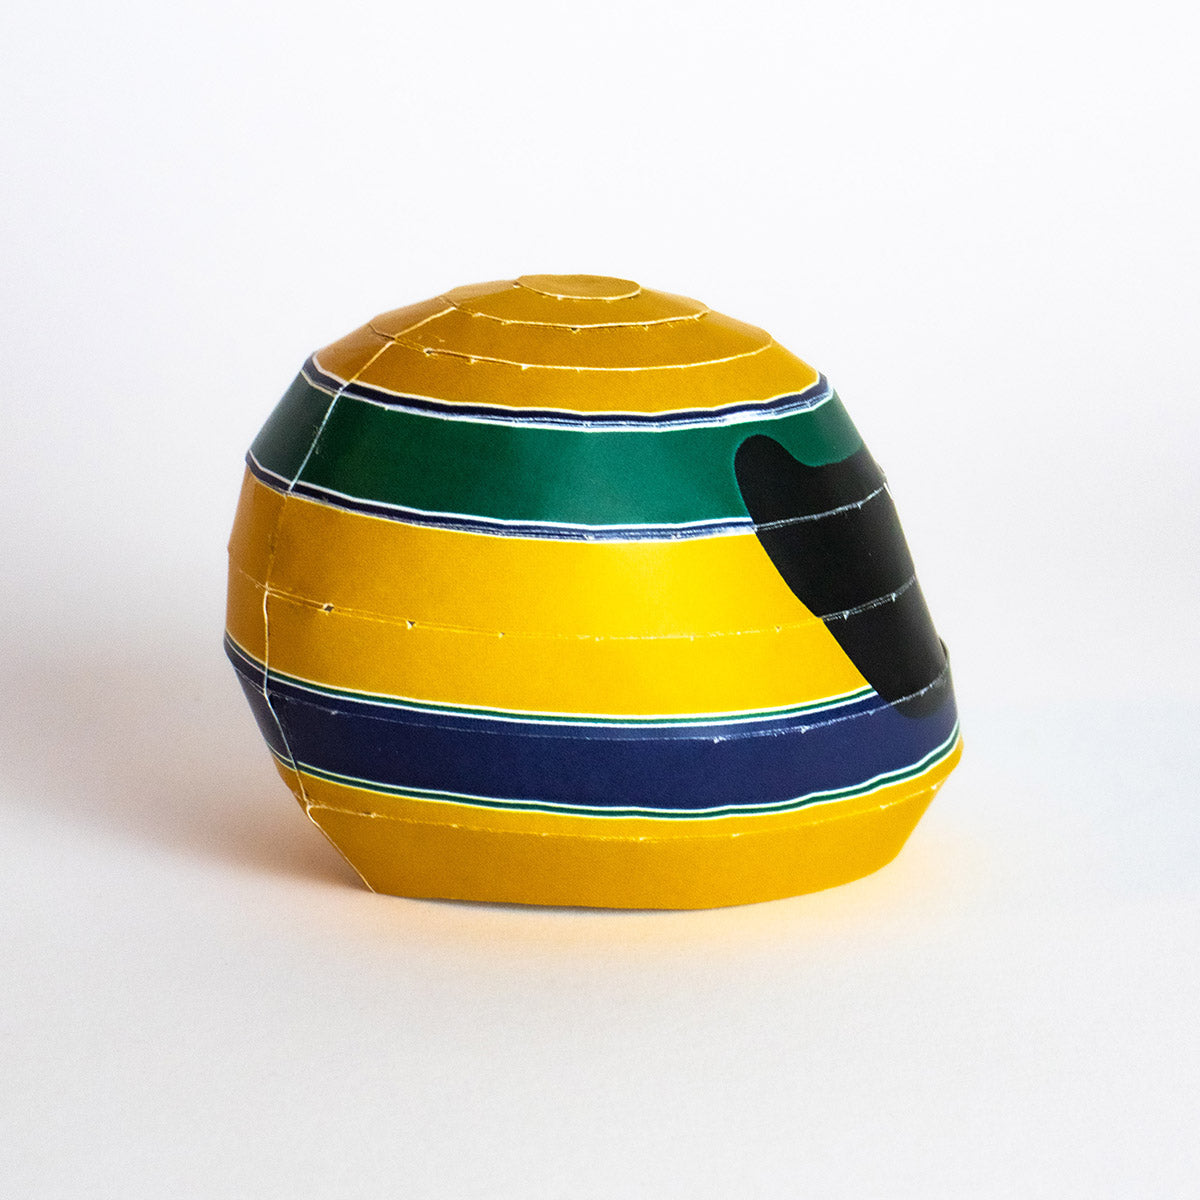 Senna Helmet 1:4 Papercraft Kit | DIY Ayrton Senna Inspired Sculpture